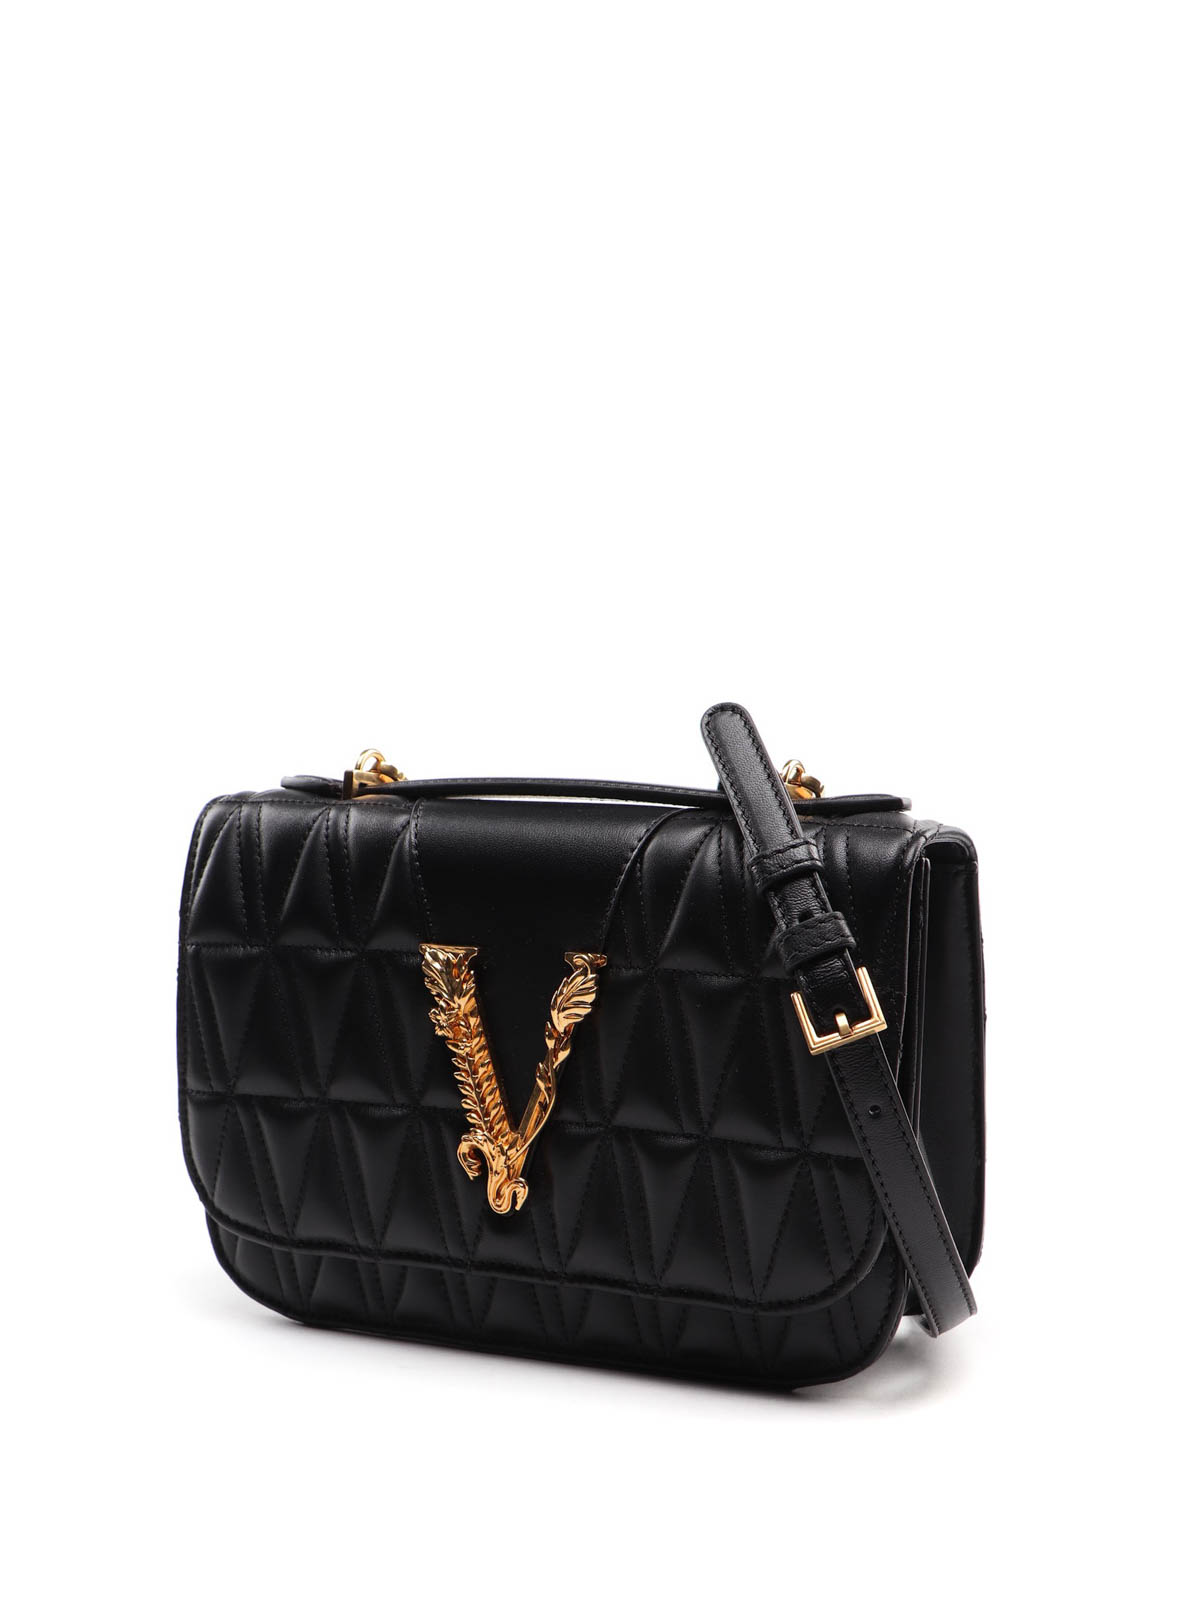 Versace Black Virtus Bag